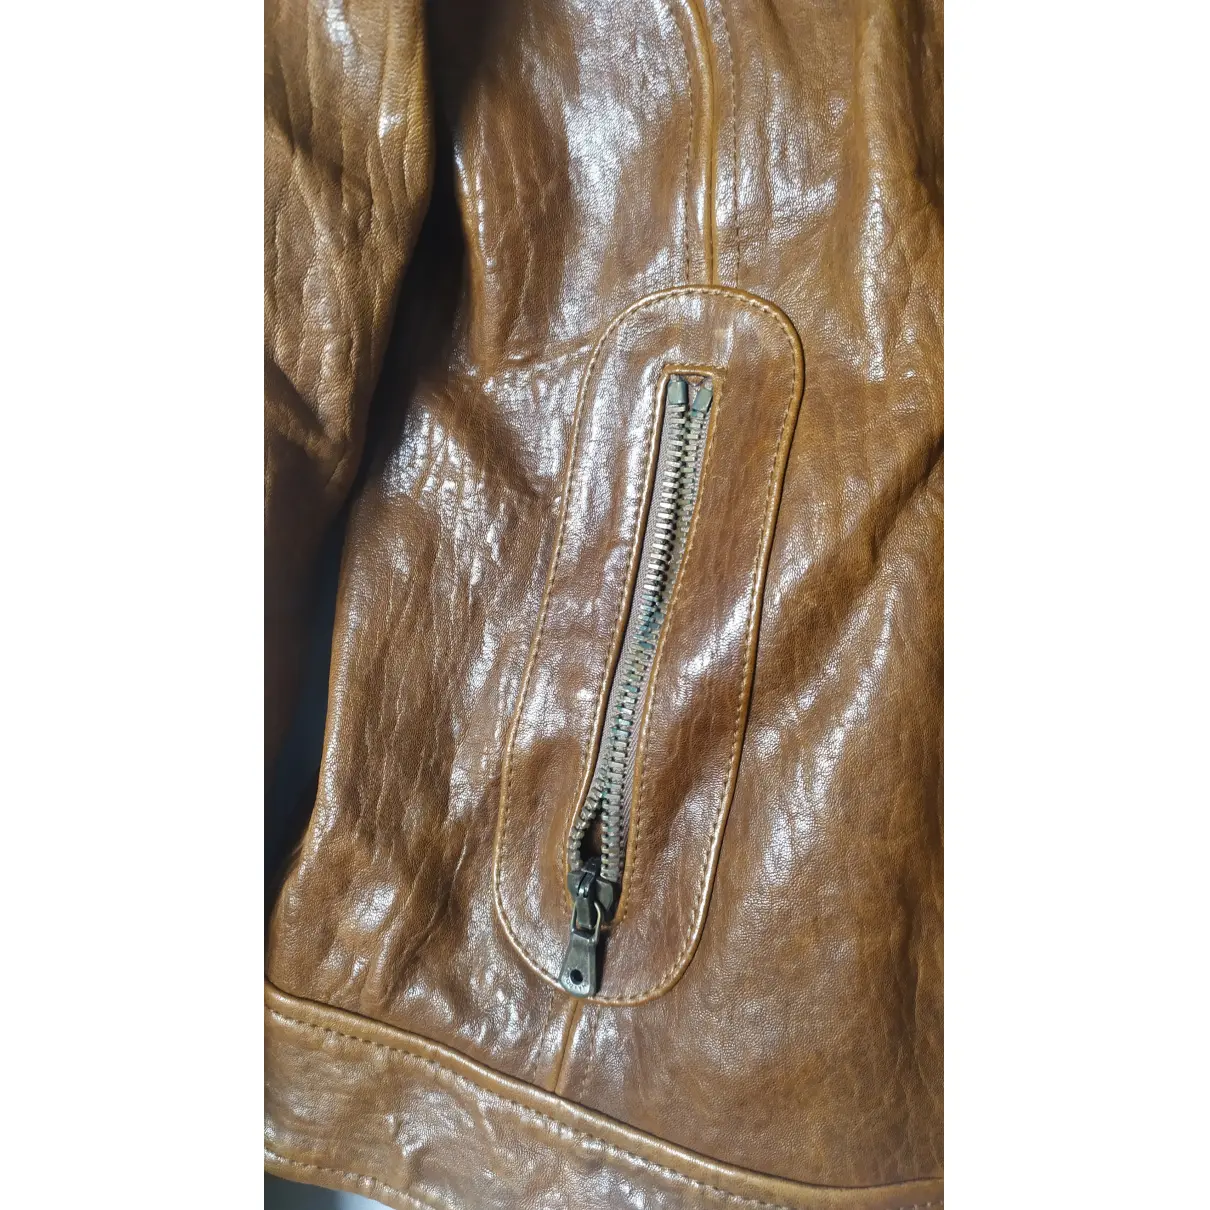 Leather biker jacket Dolce & Gabbana